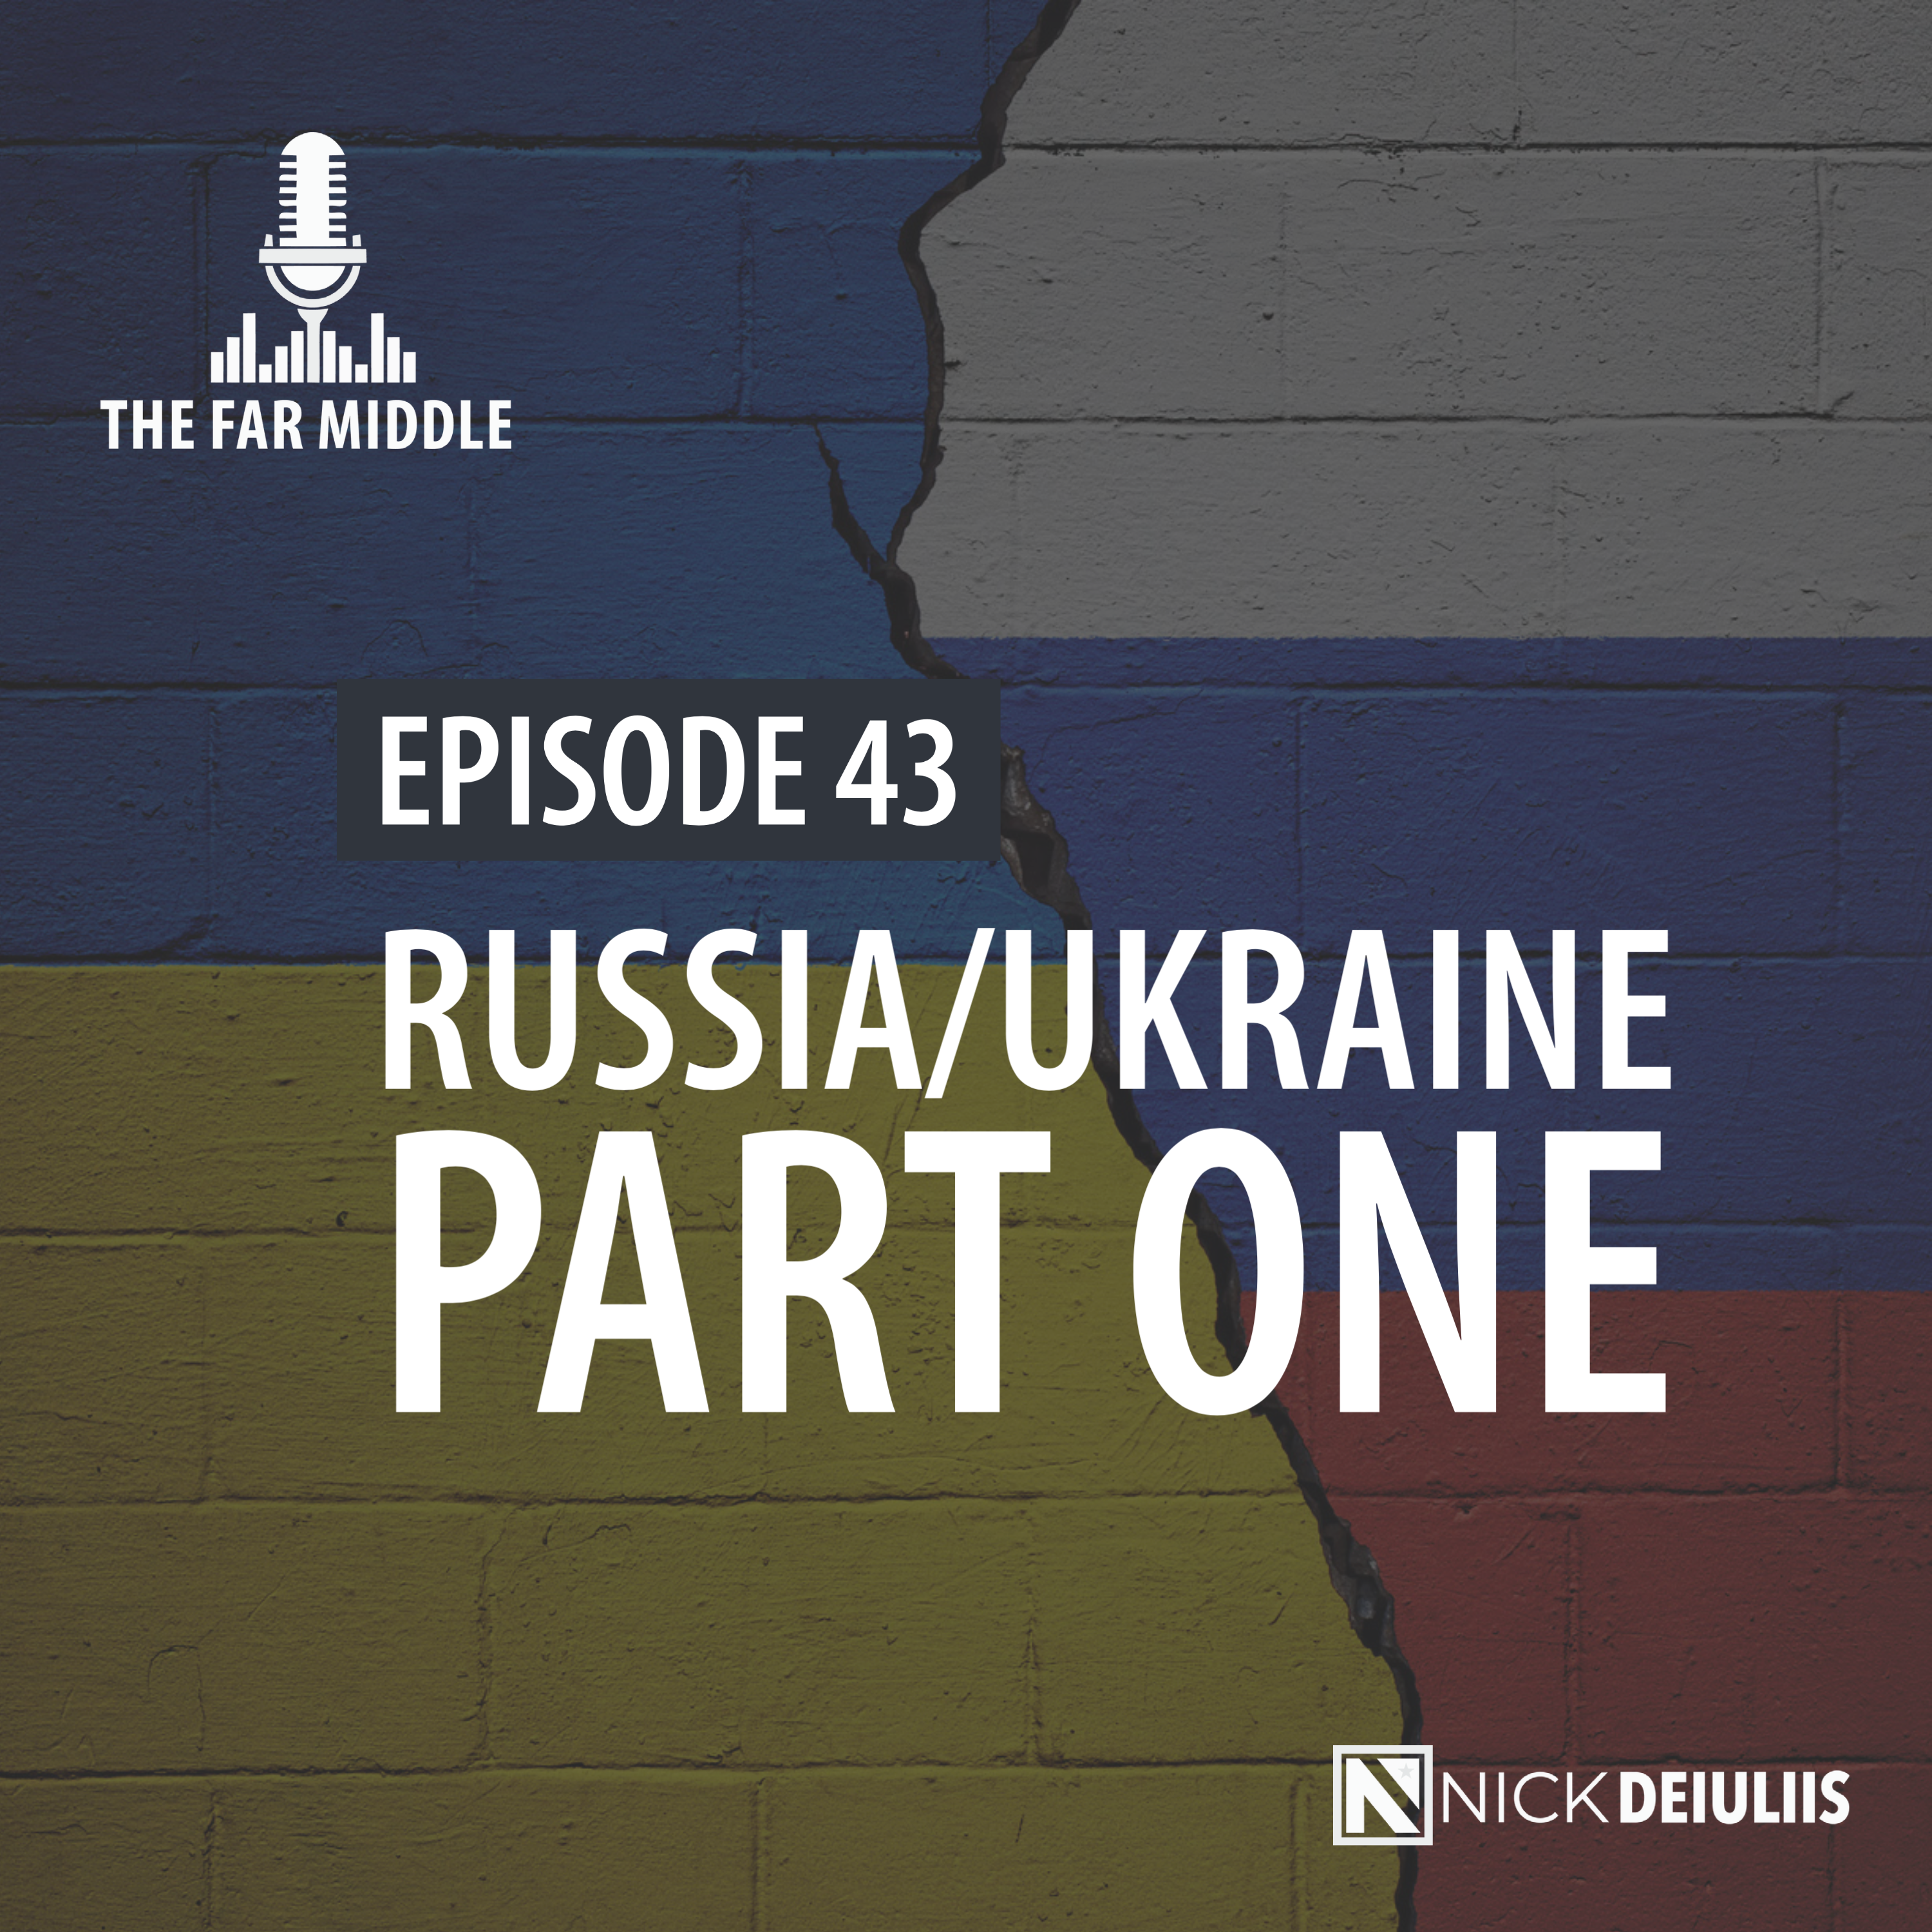 Russia/Ukraine Part One